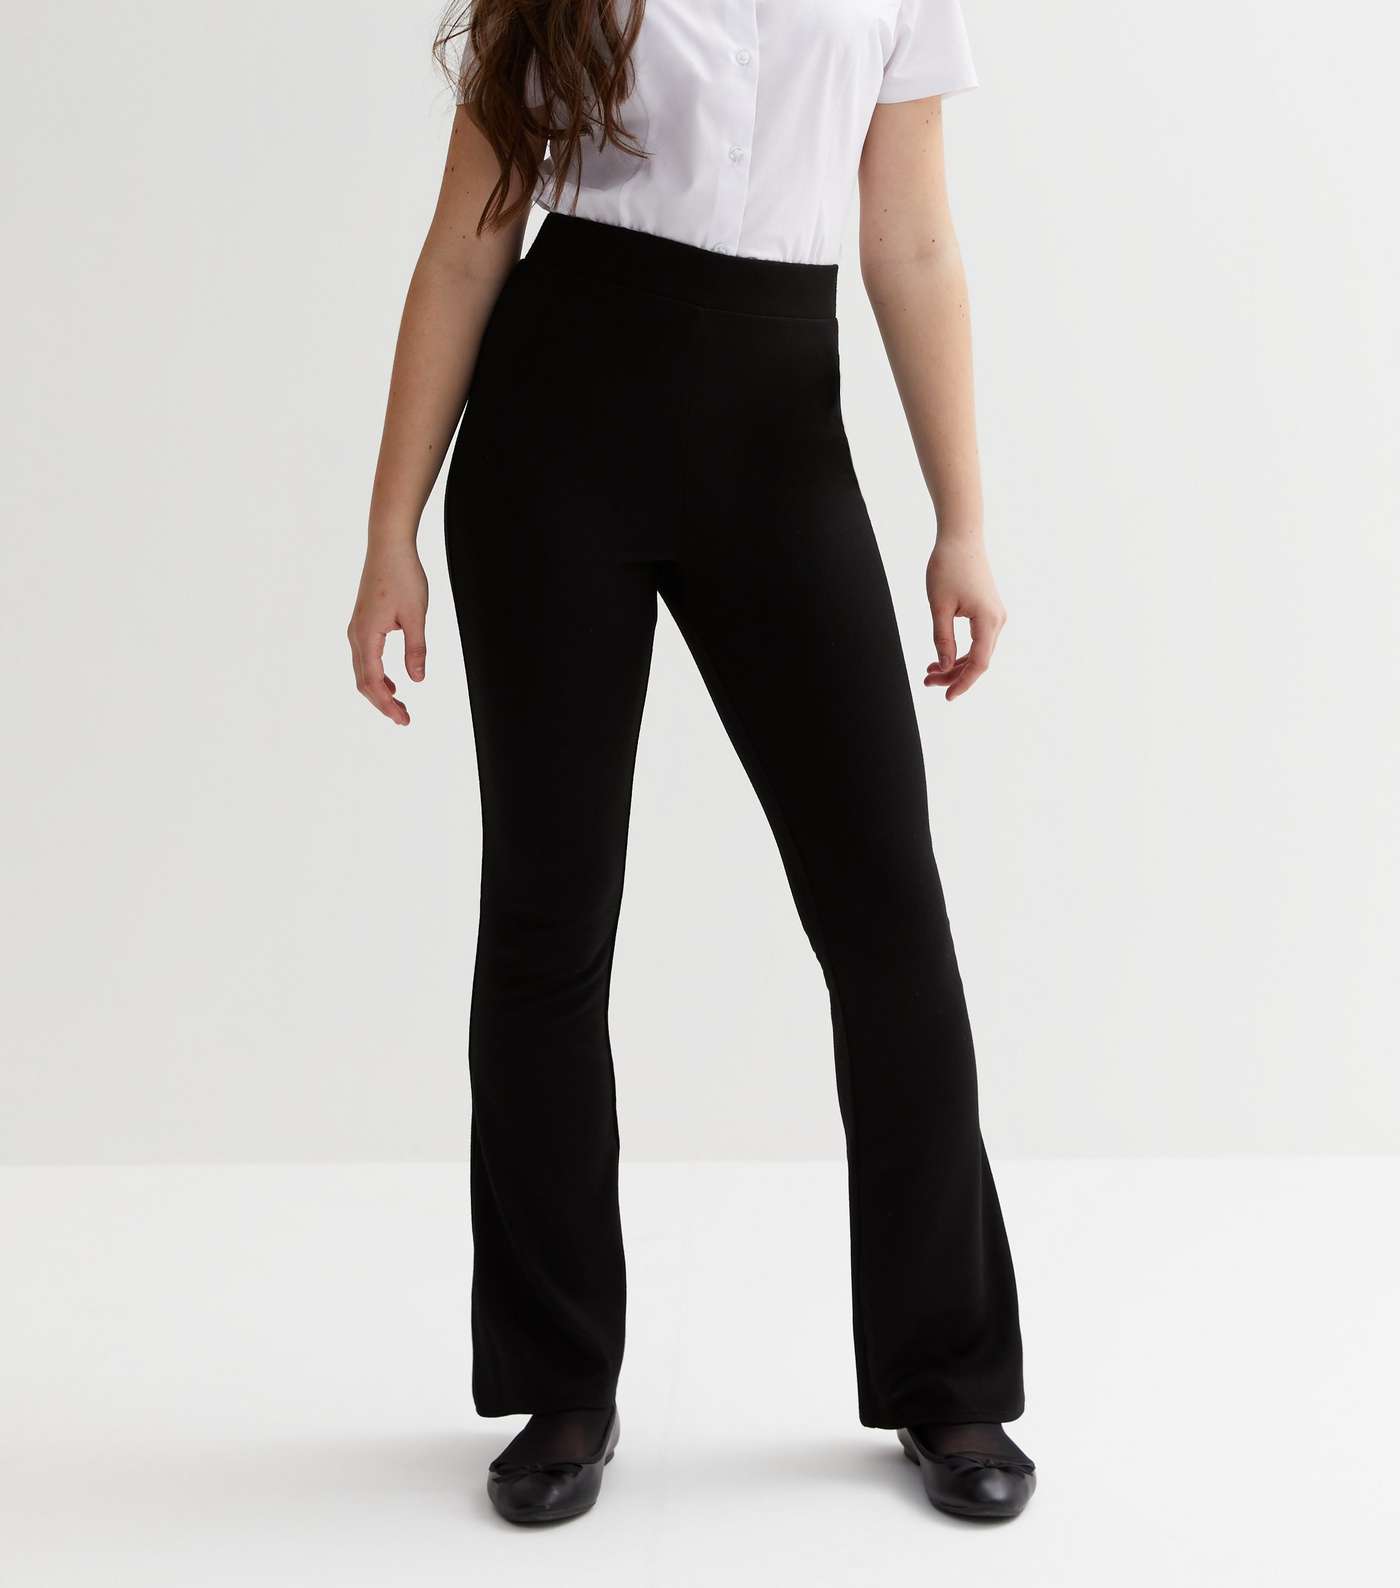 https://media2.newlookassets.com/i/newlook/863997801M1/girls/clothing/trousers/girls-black-jersey-flared-trousers.jpg?strip=true&w=1400&qlt=60&fmt=jpeg